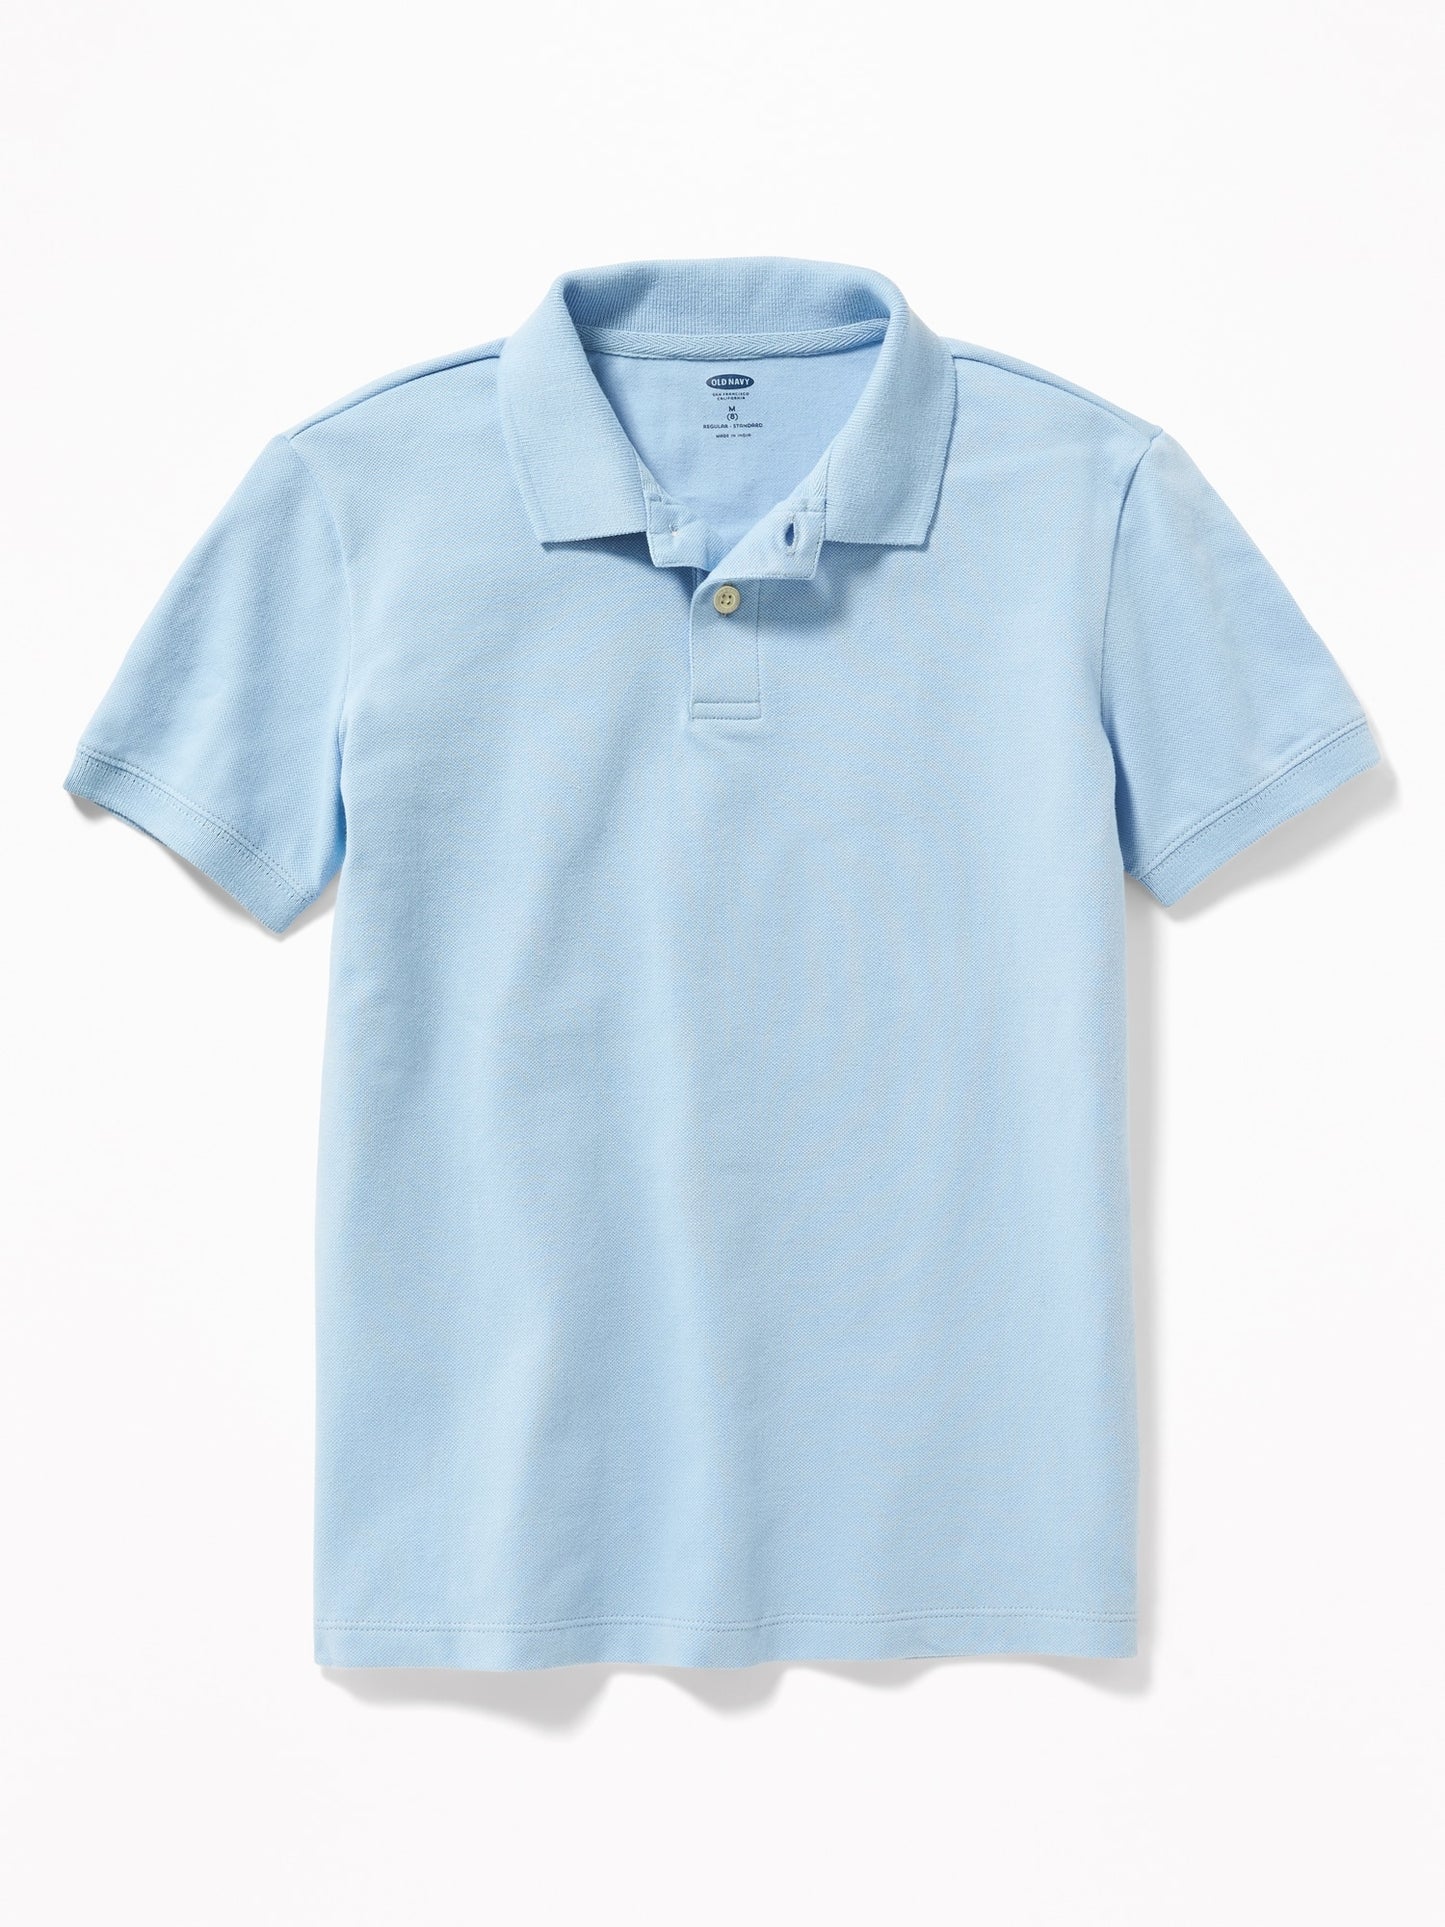 School Uniform Built-In Flex Polo Shirt for Boys